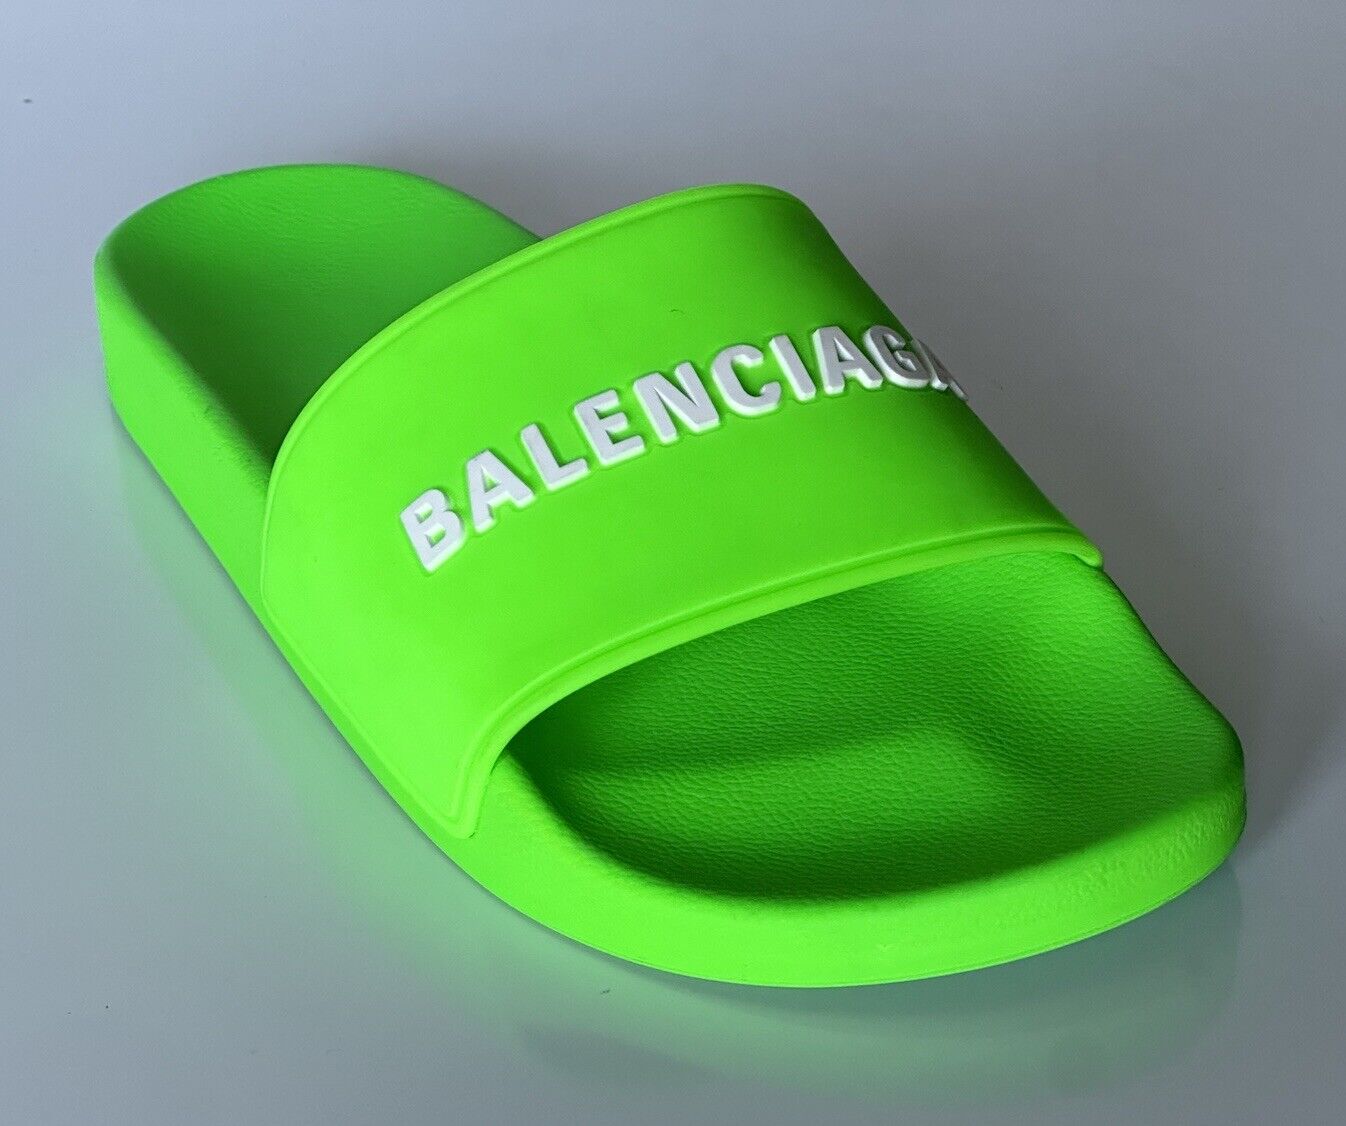 NIB $350 Balenciaga Neon Green Pool Slides Sandals 10 US (40 Euro) Italy 565547